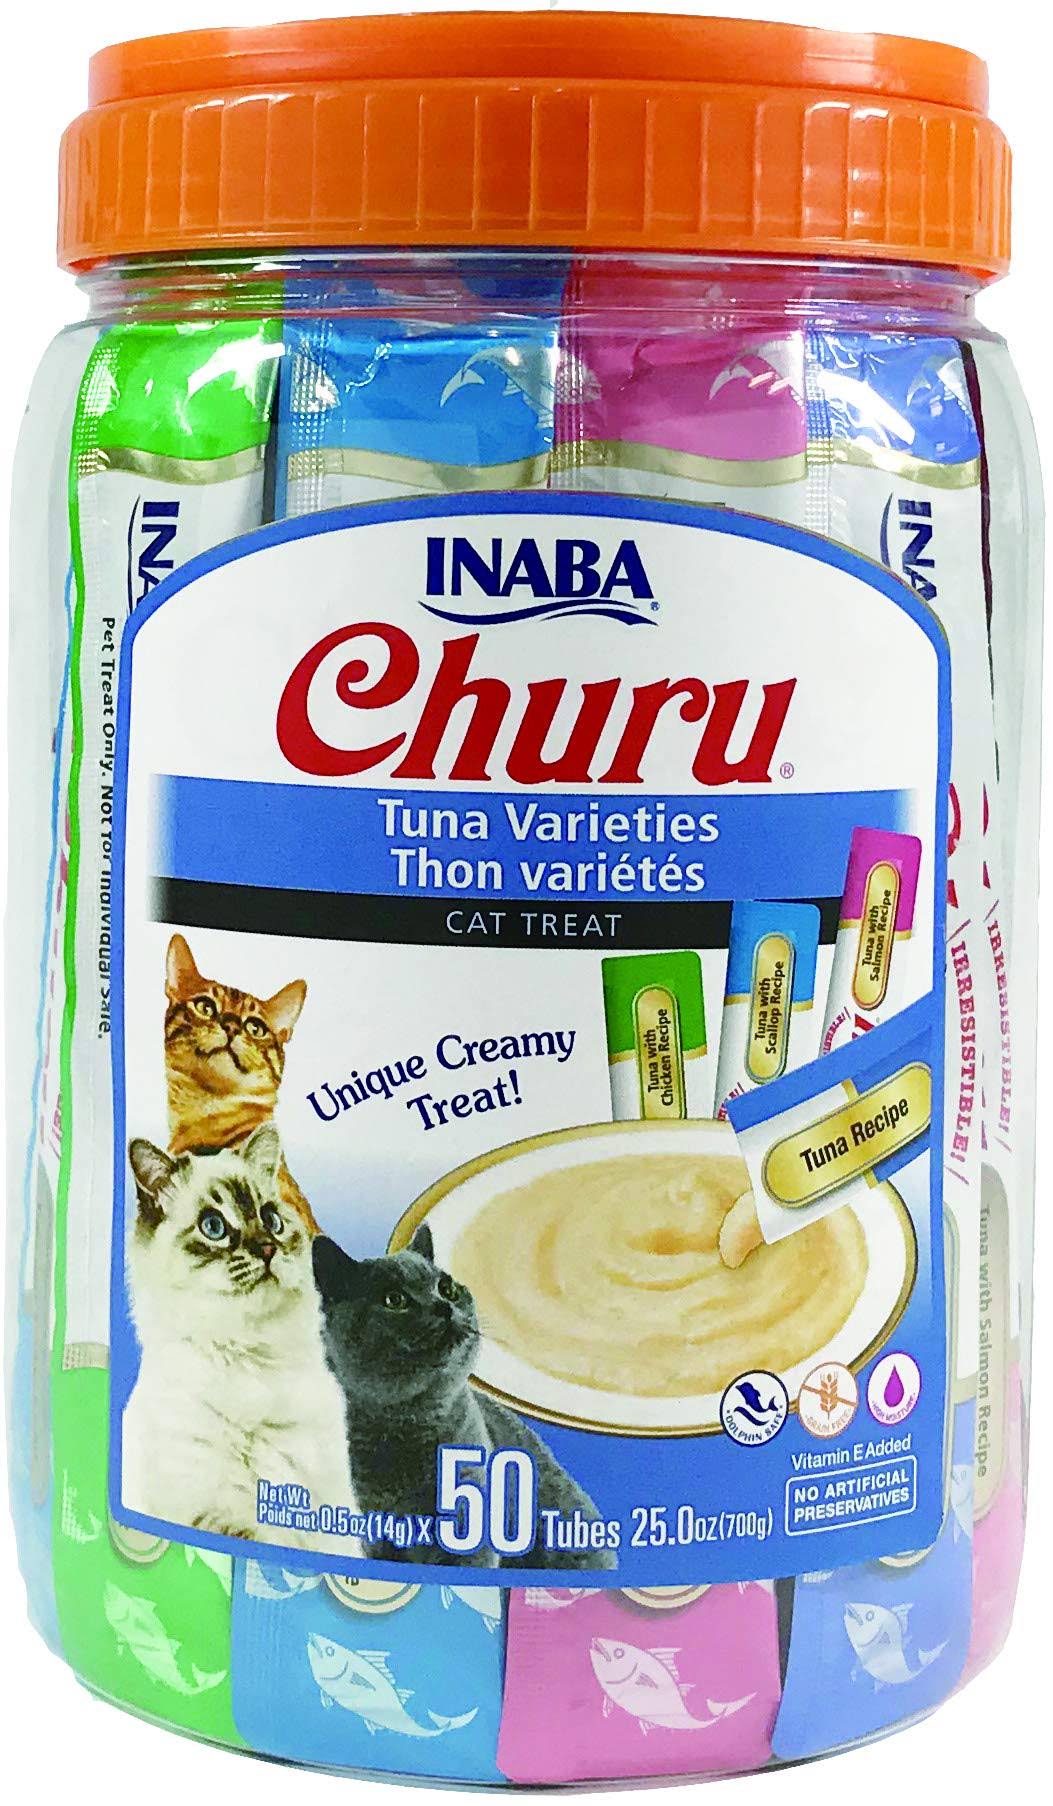 Inaba Churu Tuna Puree Cat Treat Variety Pack - 50-ct